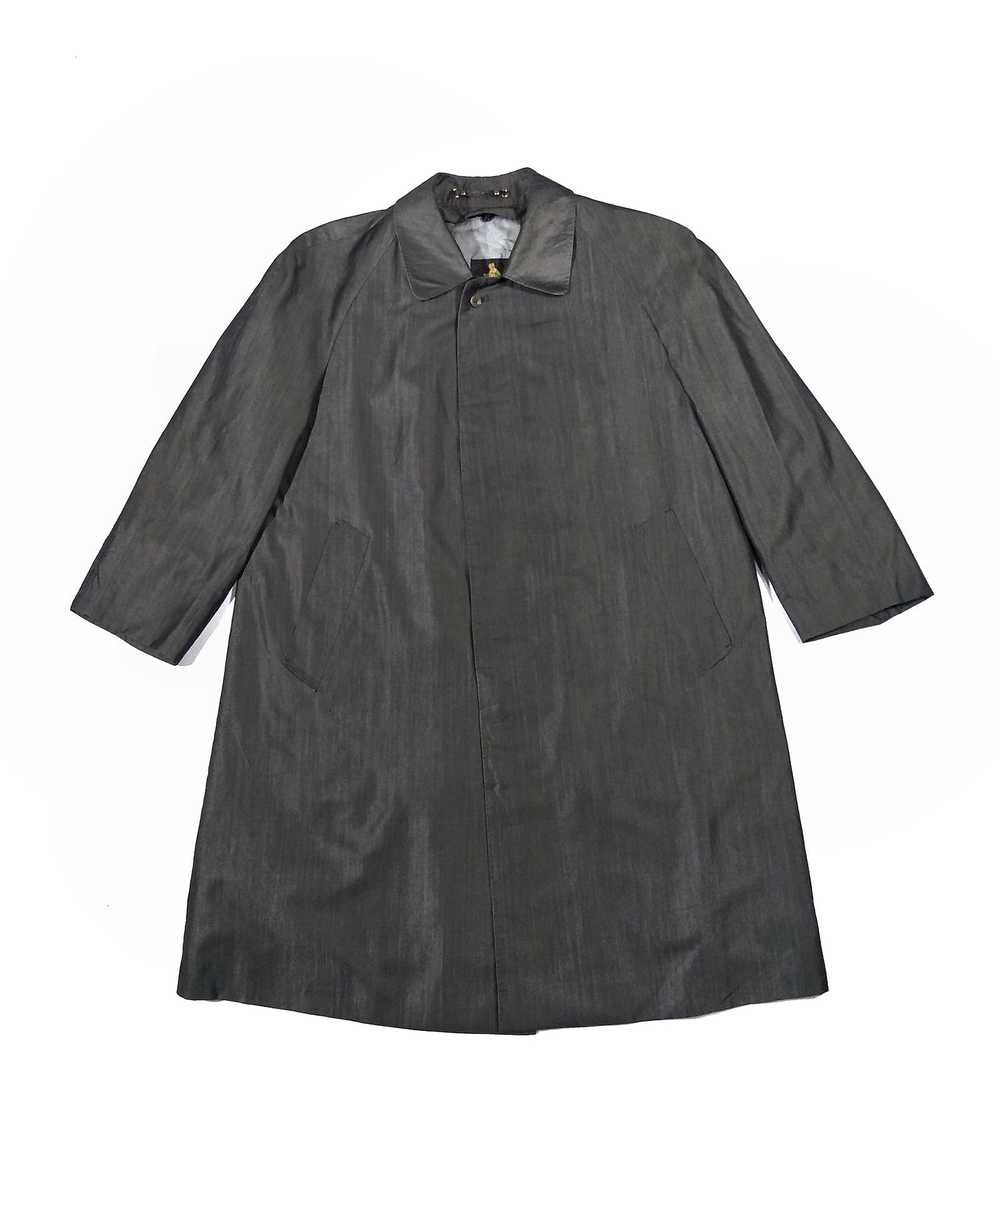 Lanvin Lanvin Full Length Coat Dark Gray Vintage - image 1